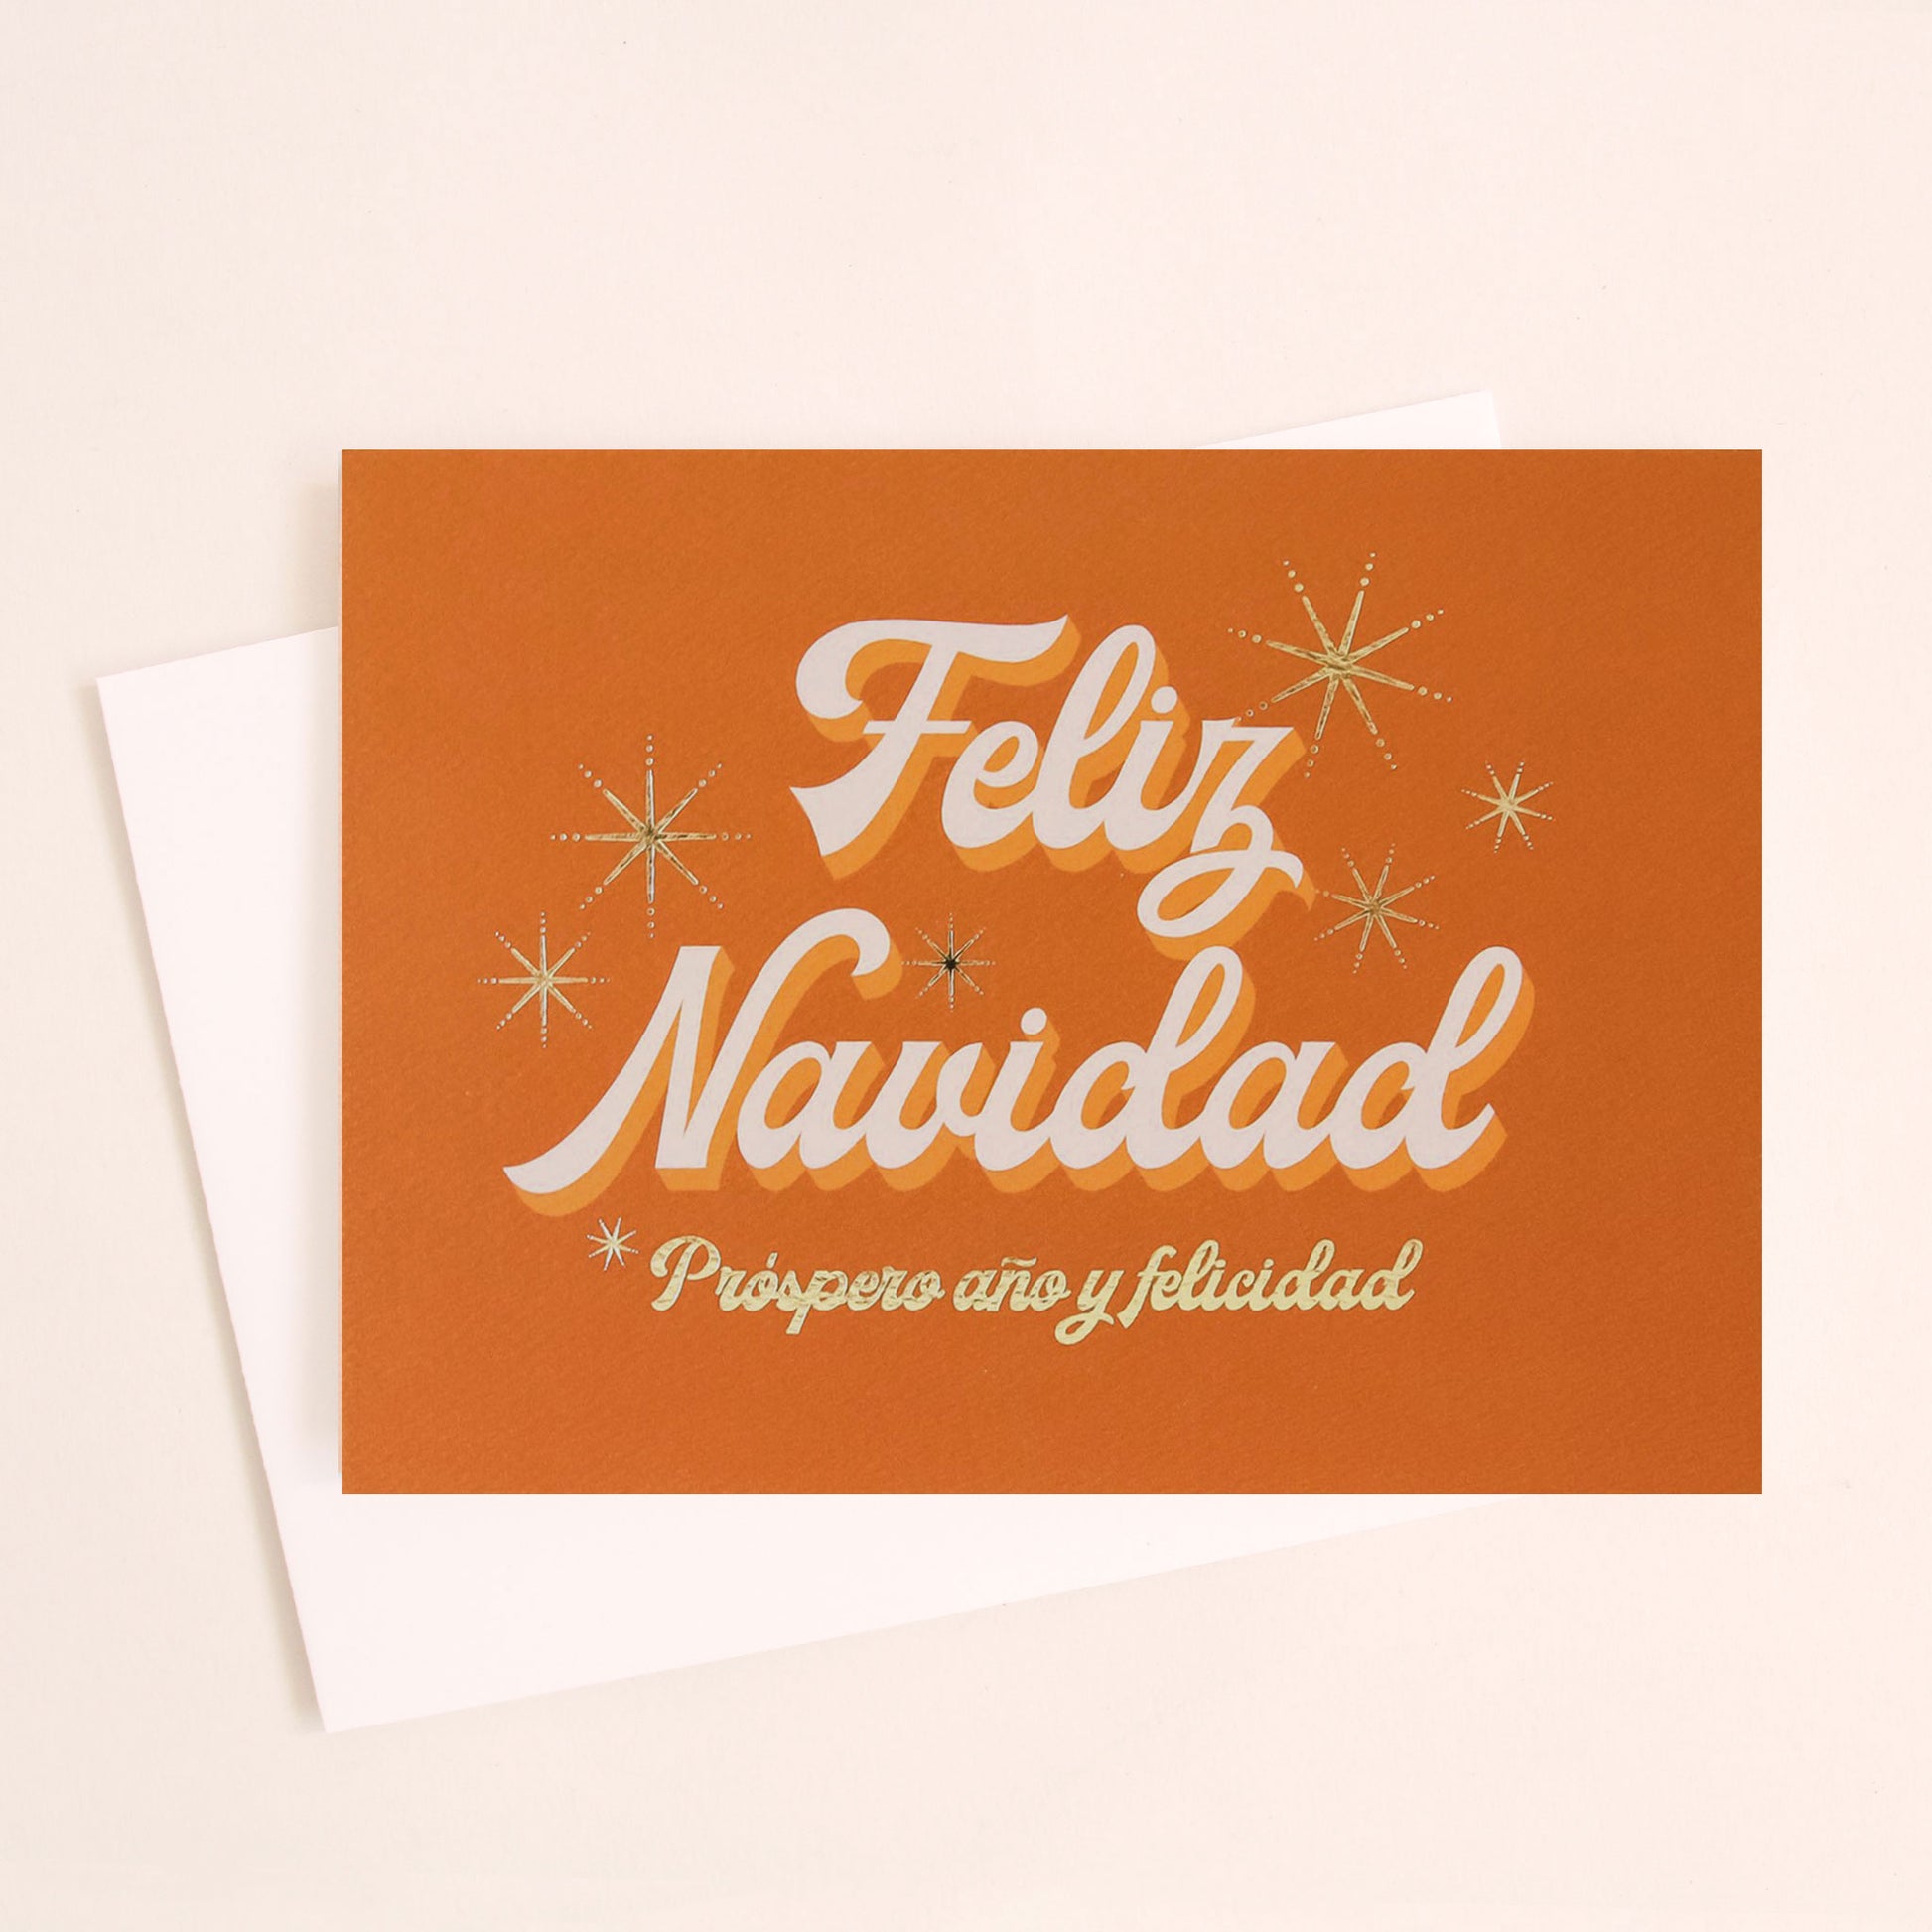 Burnt orange greeting card that reads 'Feliz Navidad' in white cursive lettering. Below reads 'prosper año y felicidad' in gold foil lettering. Gold foil stars twinkle behind the text. 